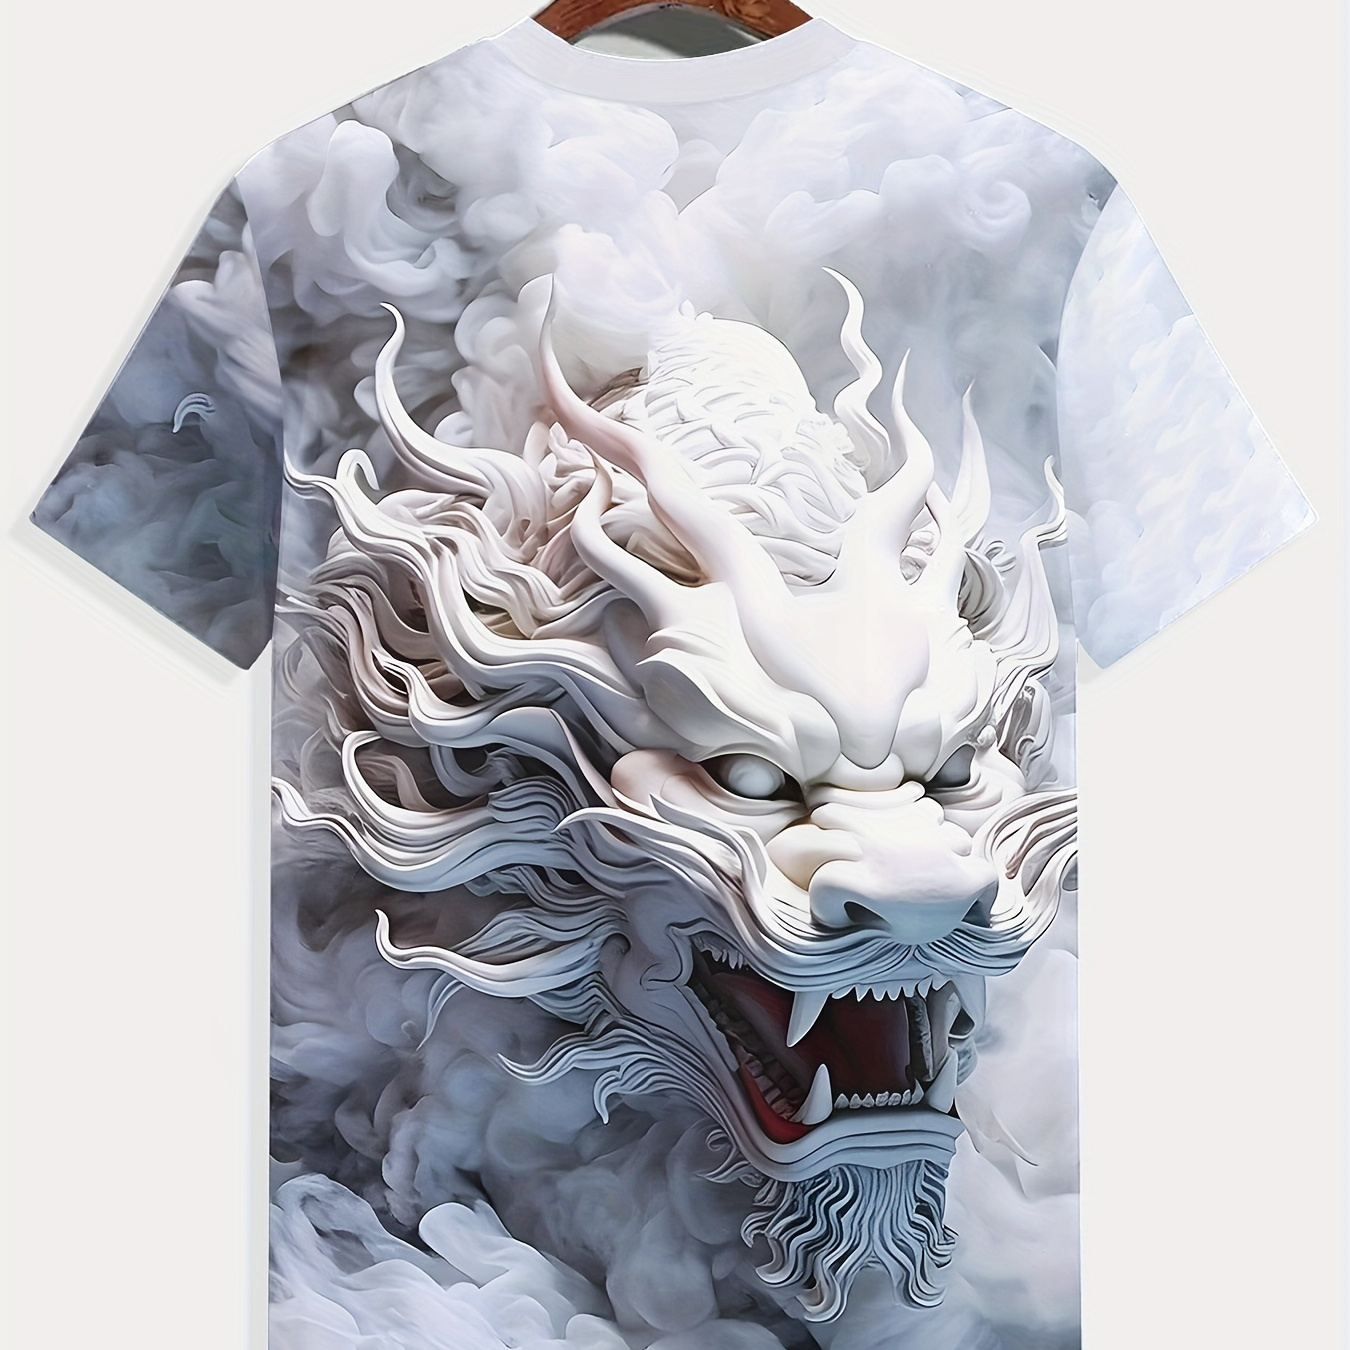 

Men's Dragon Print T-shirt, Casual Short Sleeve Crew Neck Tee, Men's Clothing For Outdoor